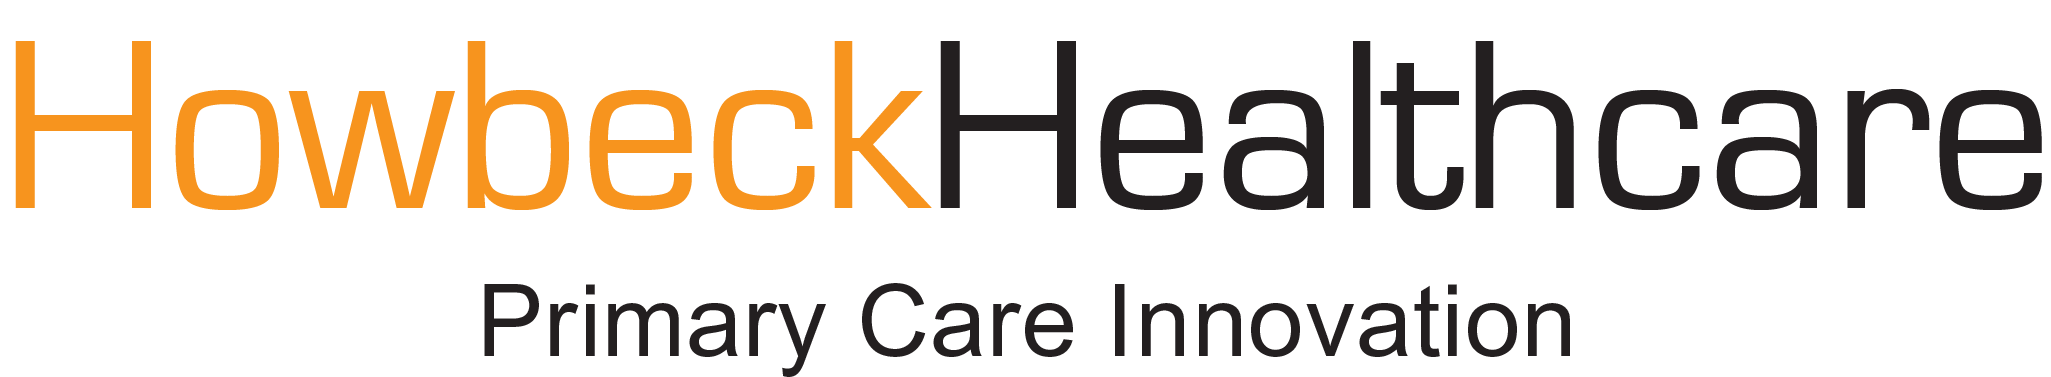 Howbeck Healthcare